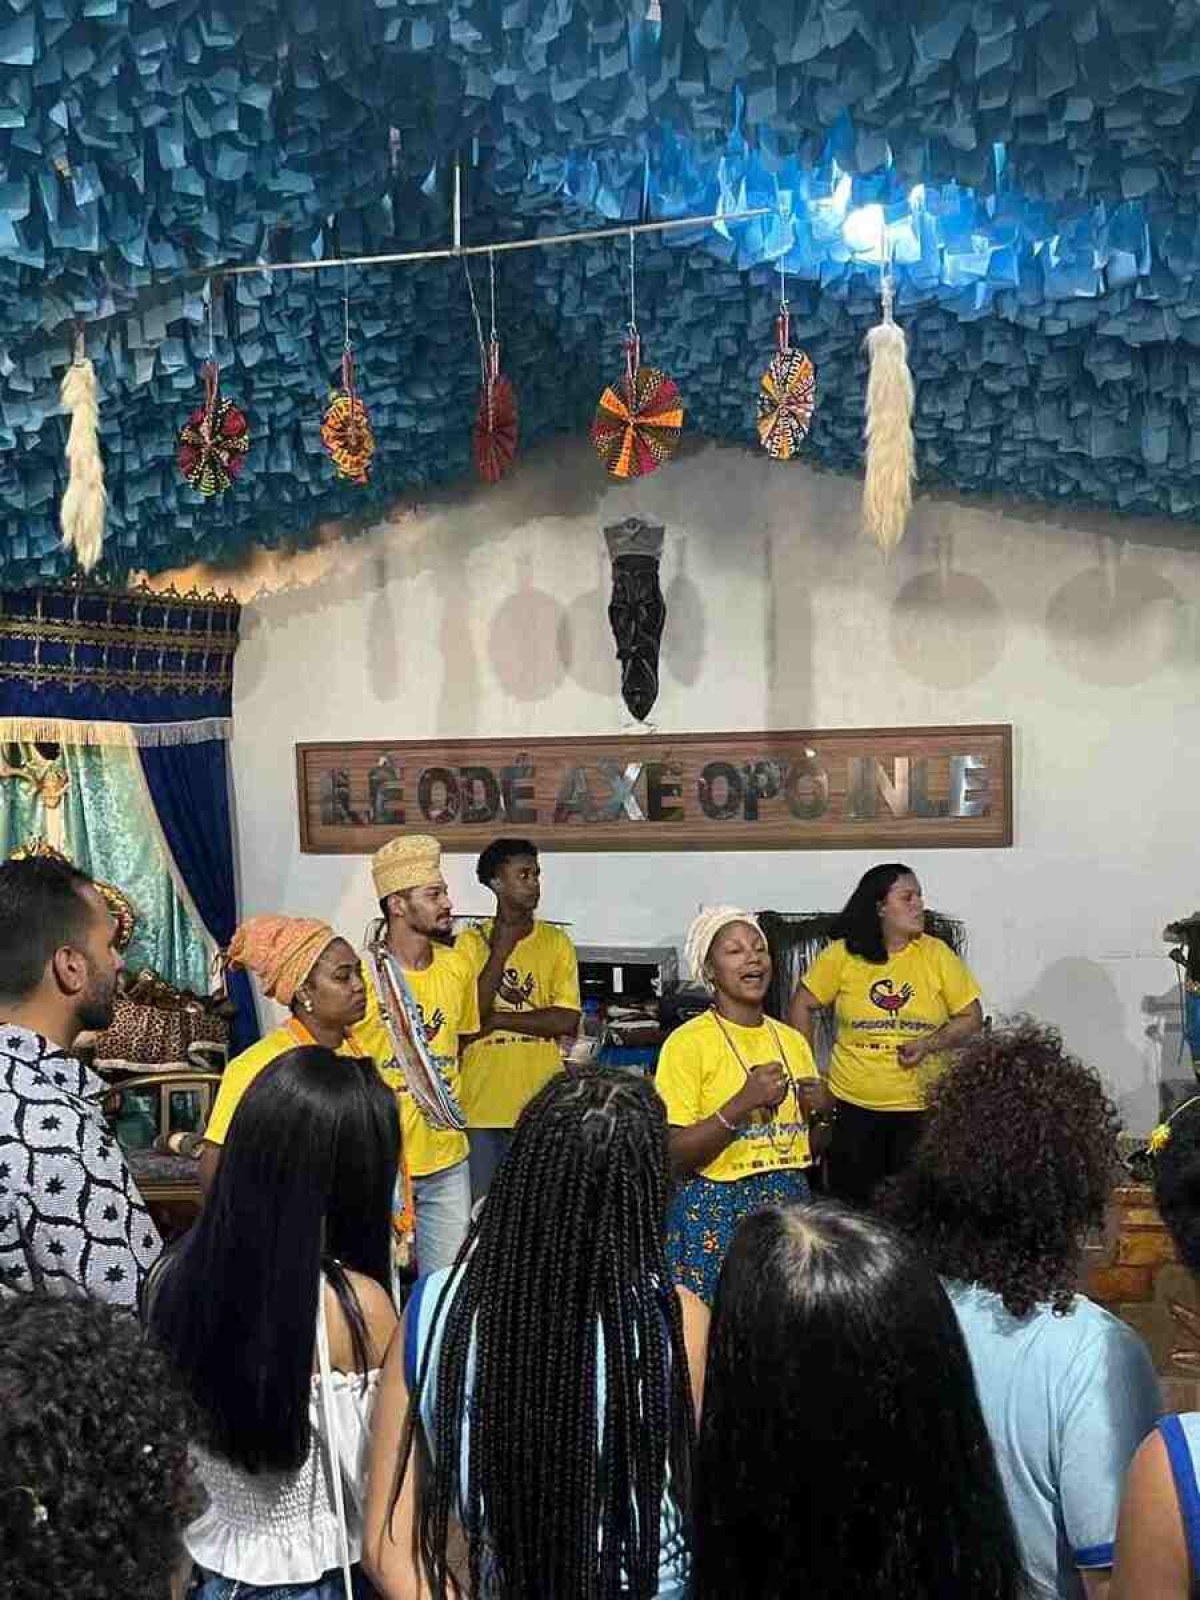 Projeto Ilê Odé Axé Opo Inle ensinando sobre a cultura africana aos alunos do CEM 2 de Planaltina